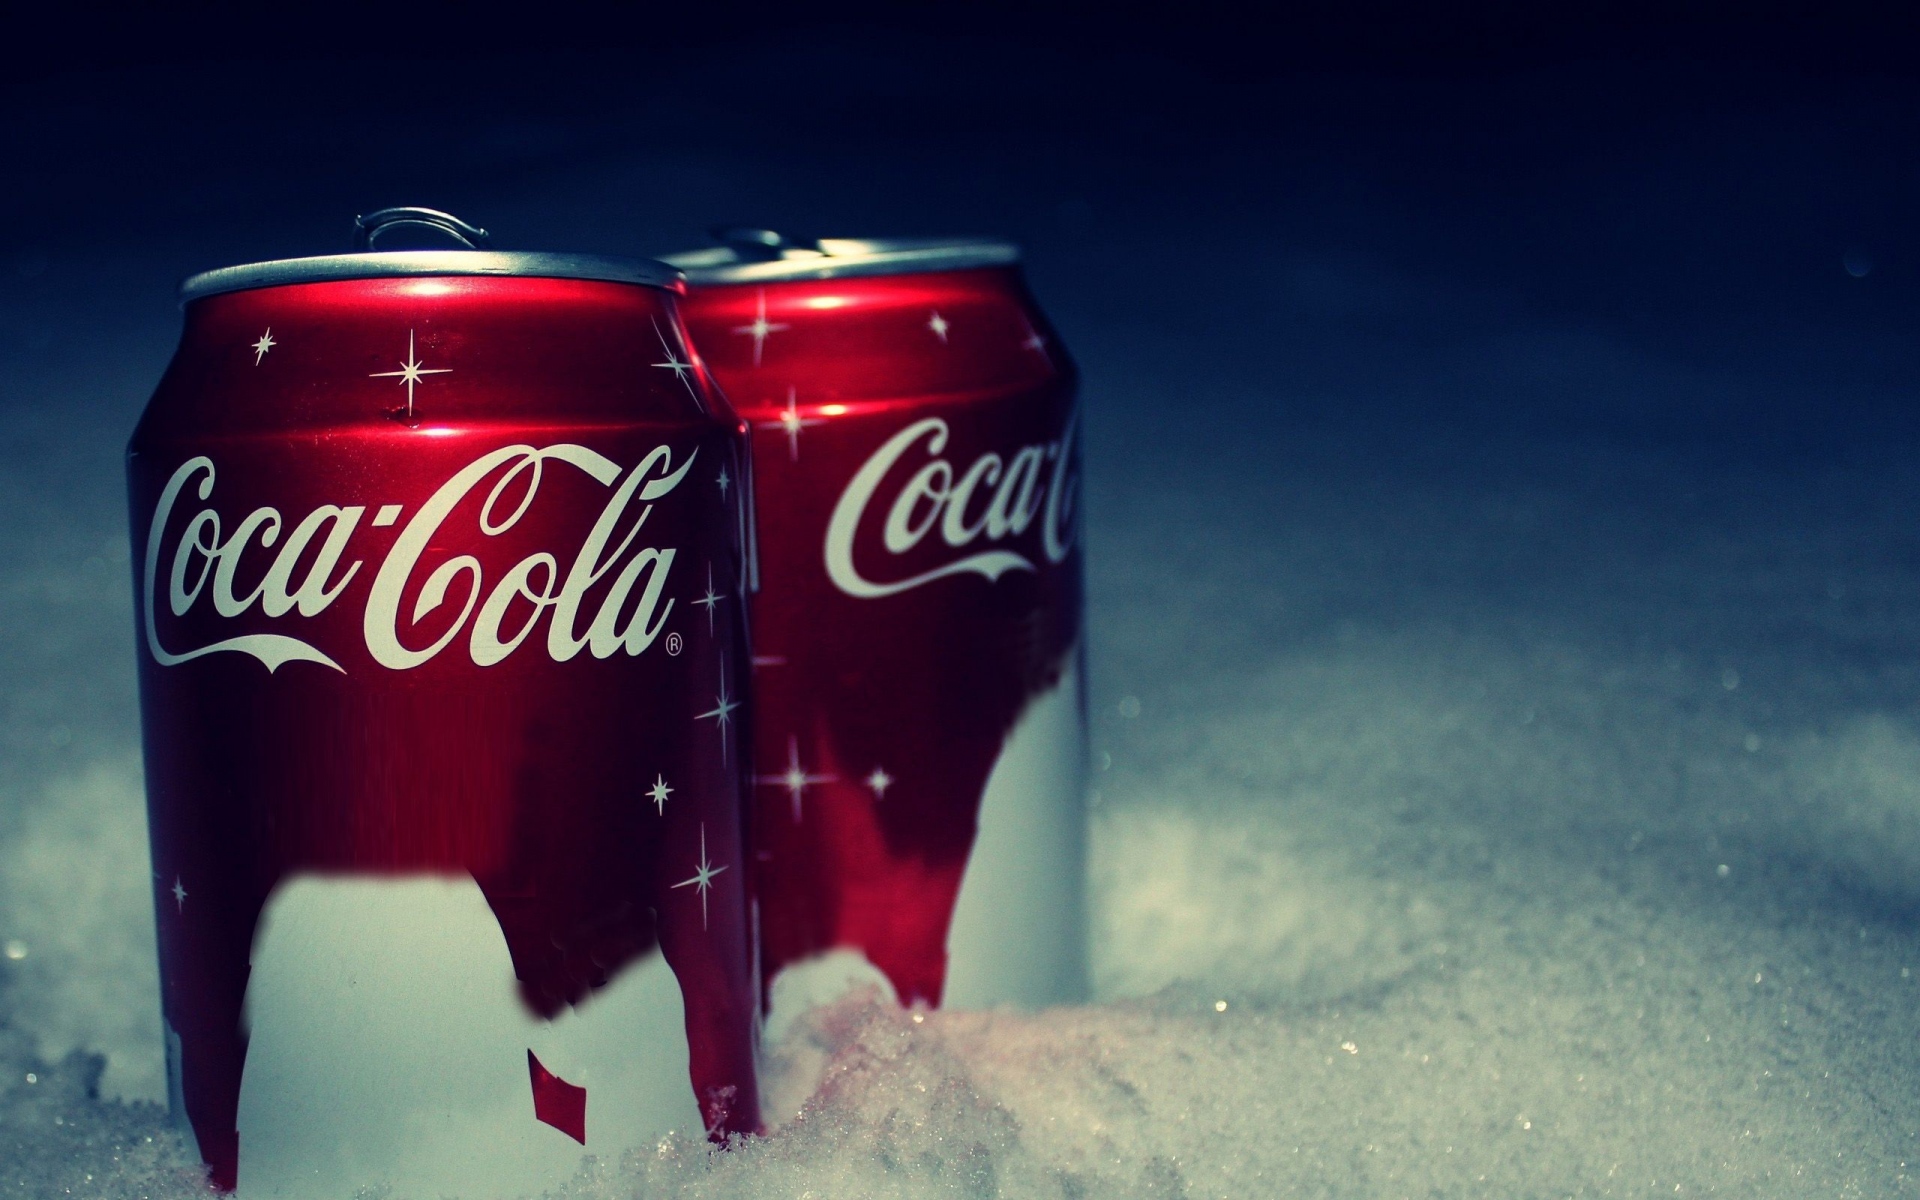 Картинки Кока-кола, бренд, напитки, банк, снег, новый год фото и обои на рабочий стол